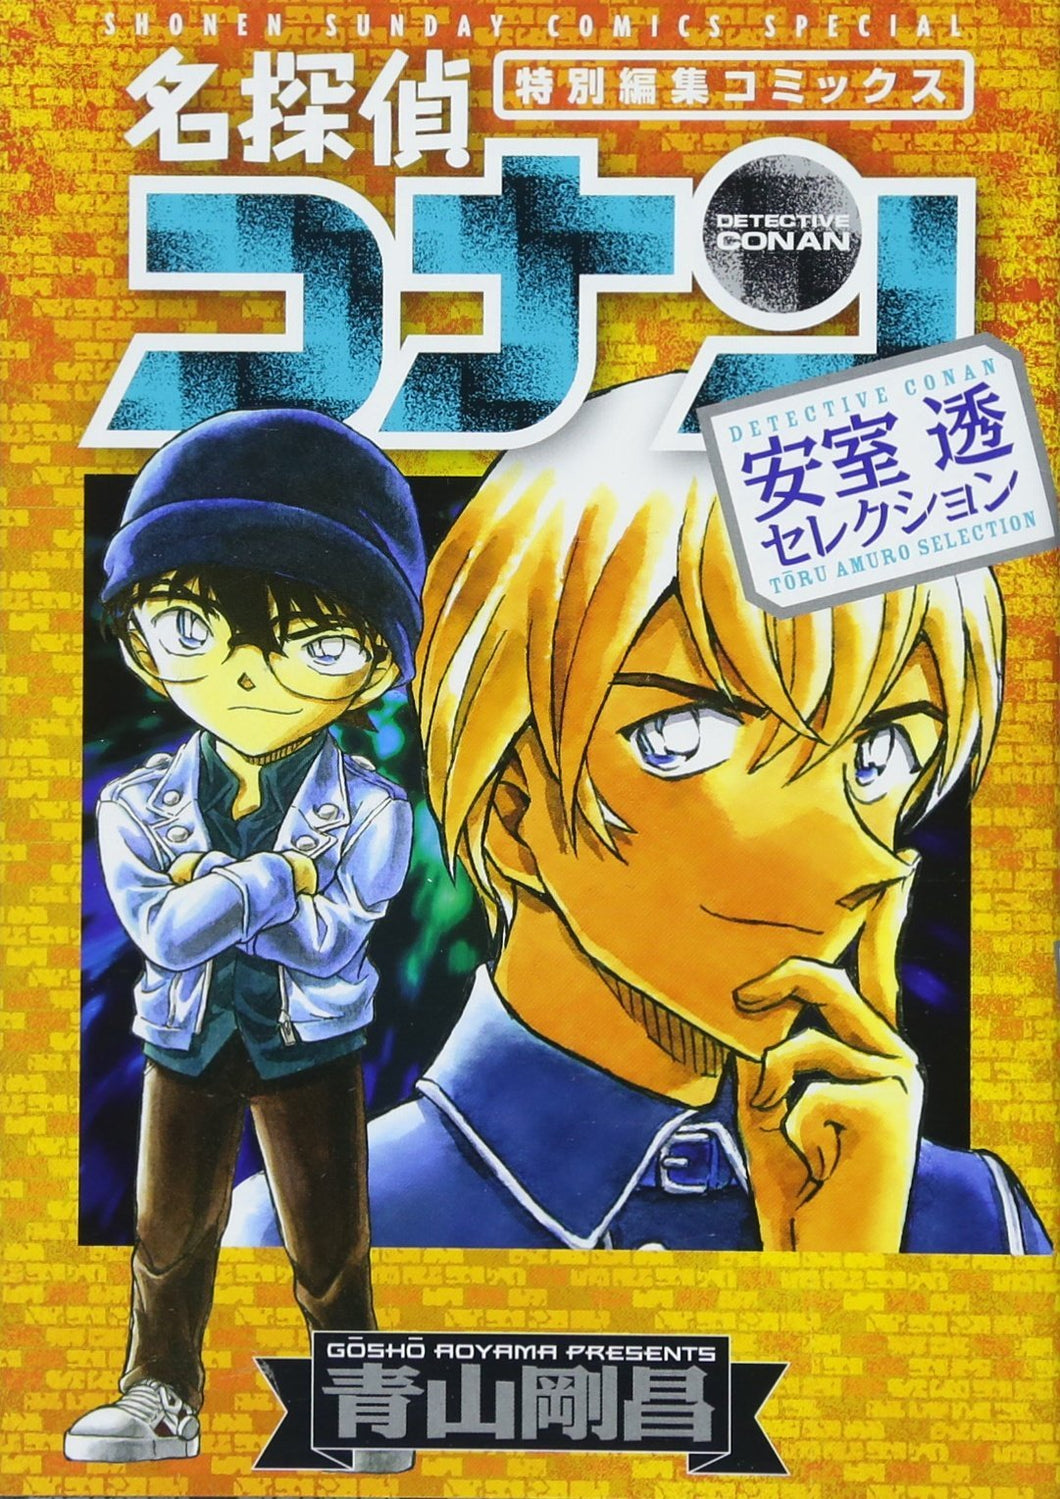 Detective Conan Manga Selection in Japanese: Amuro & Borbon Stories